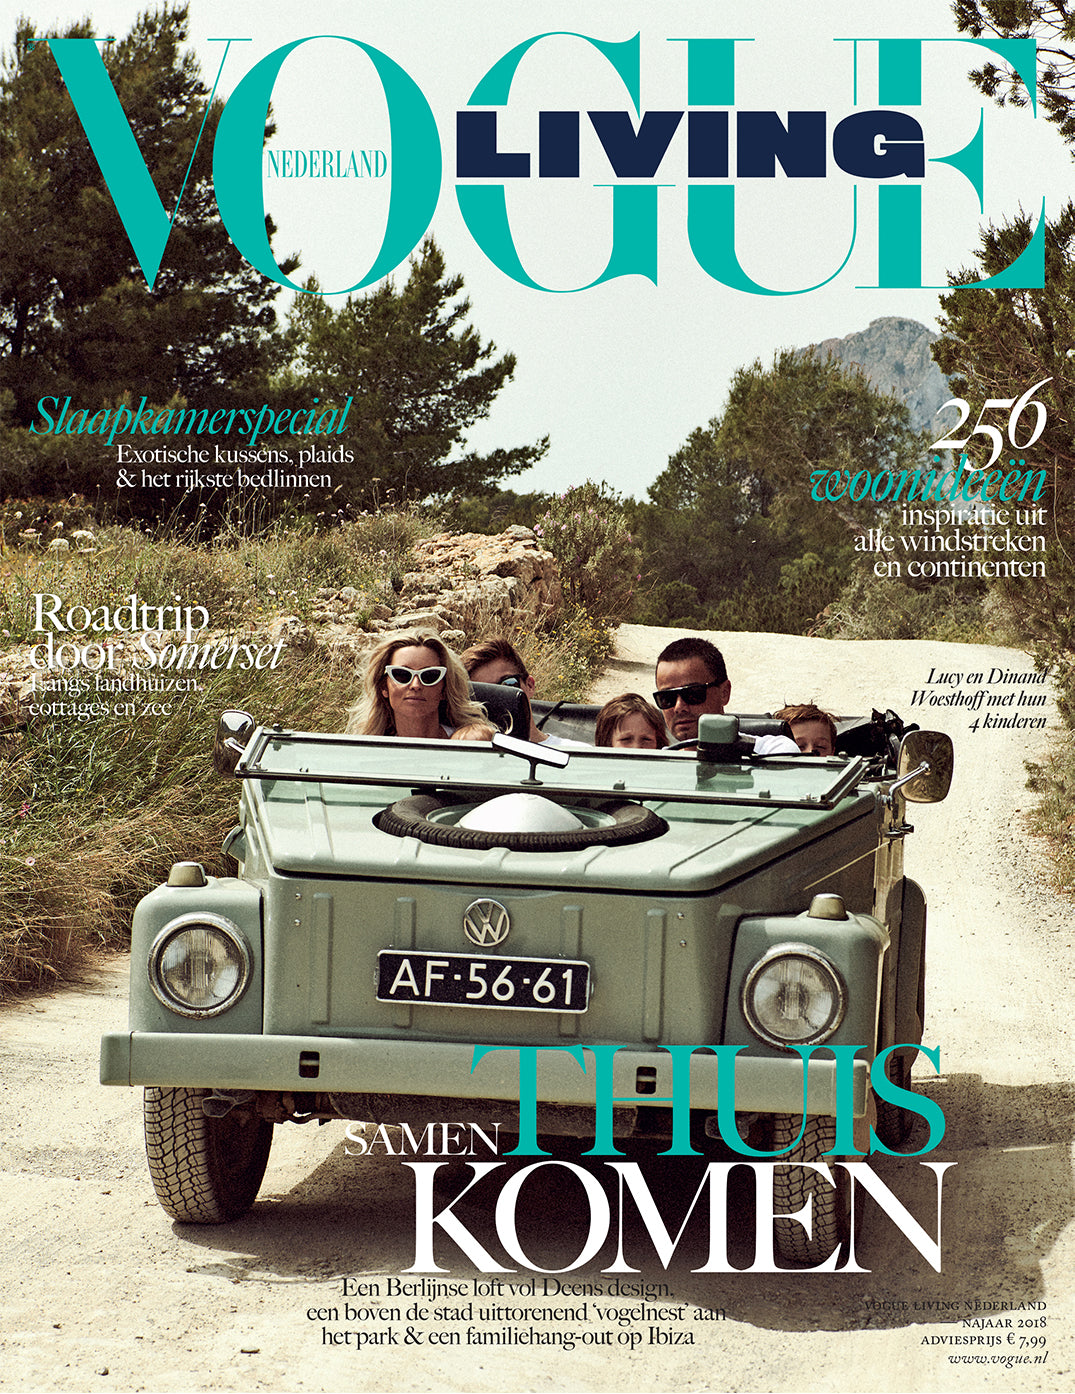 Vogue Living - September Issue